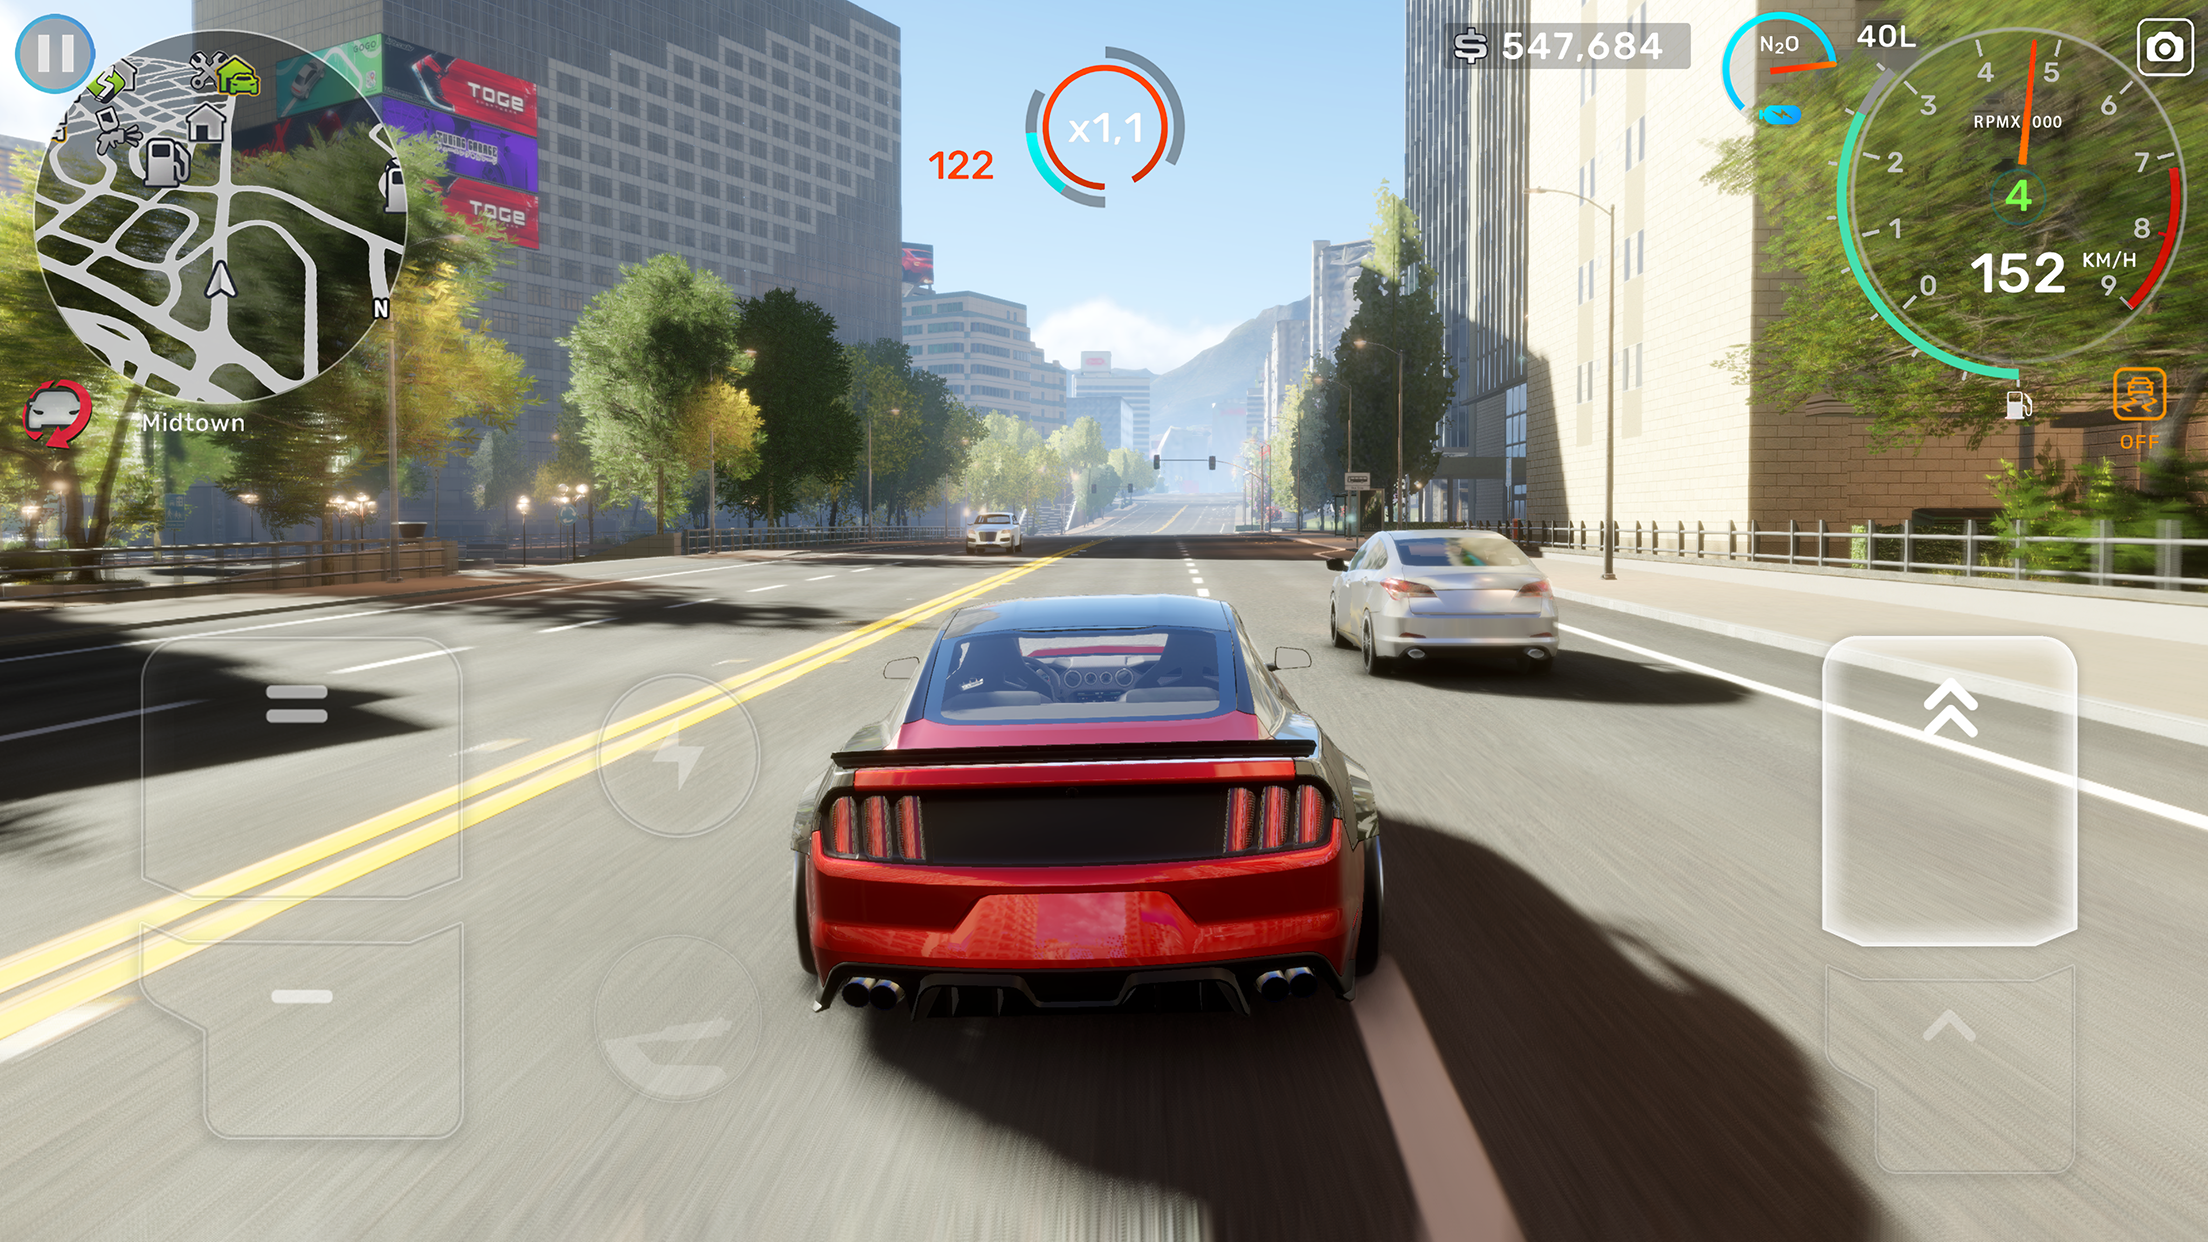 Race Master 3D - Car Racing v3.0.9 Mod Apk (Unlimited Money and No